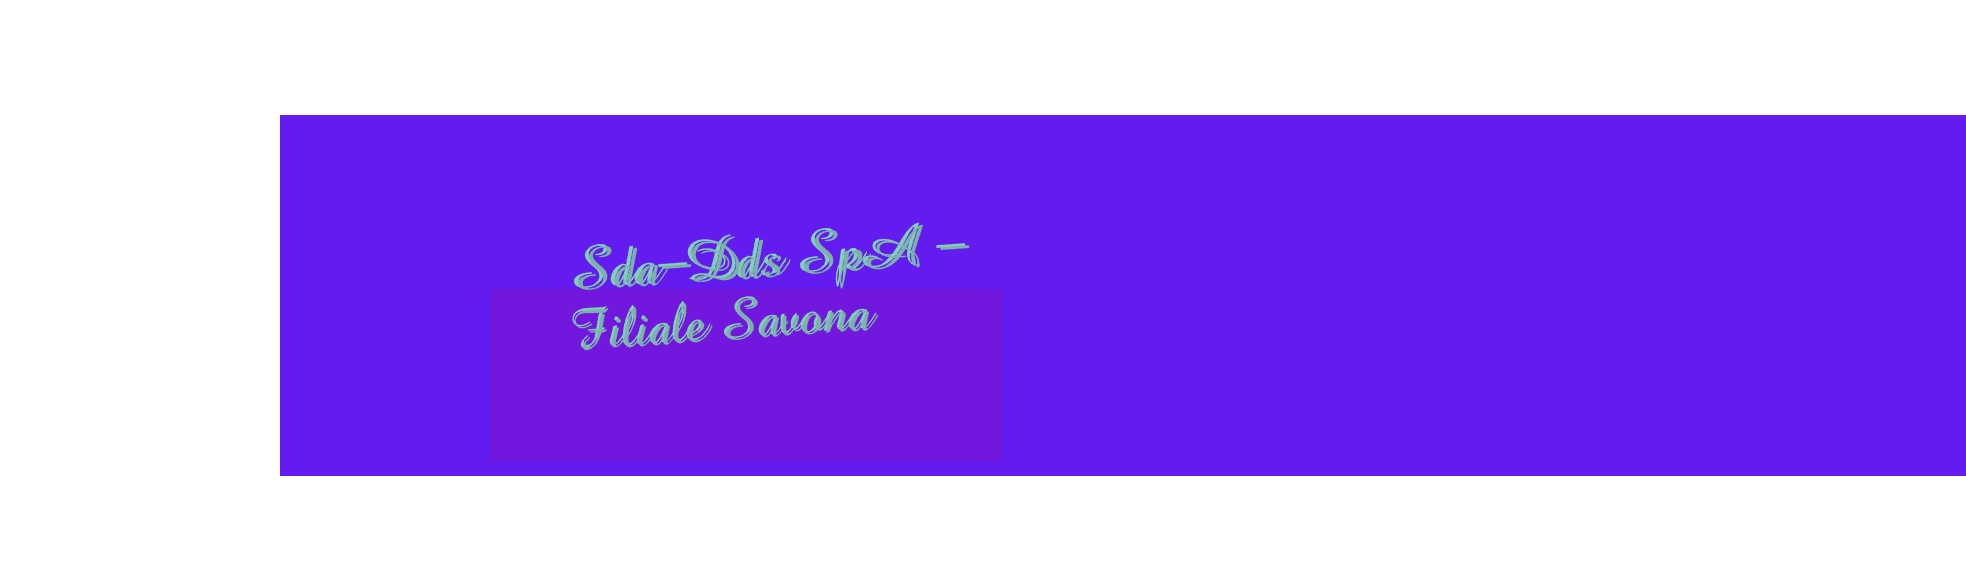 logo Sda-Dds SpA - Filiale Savona